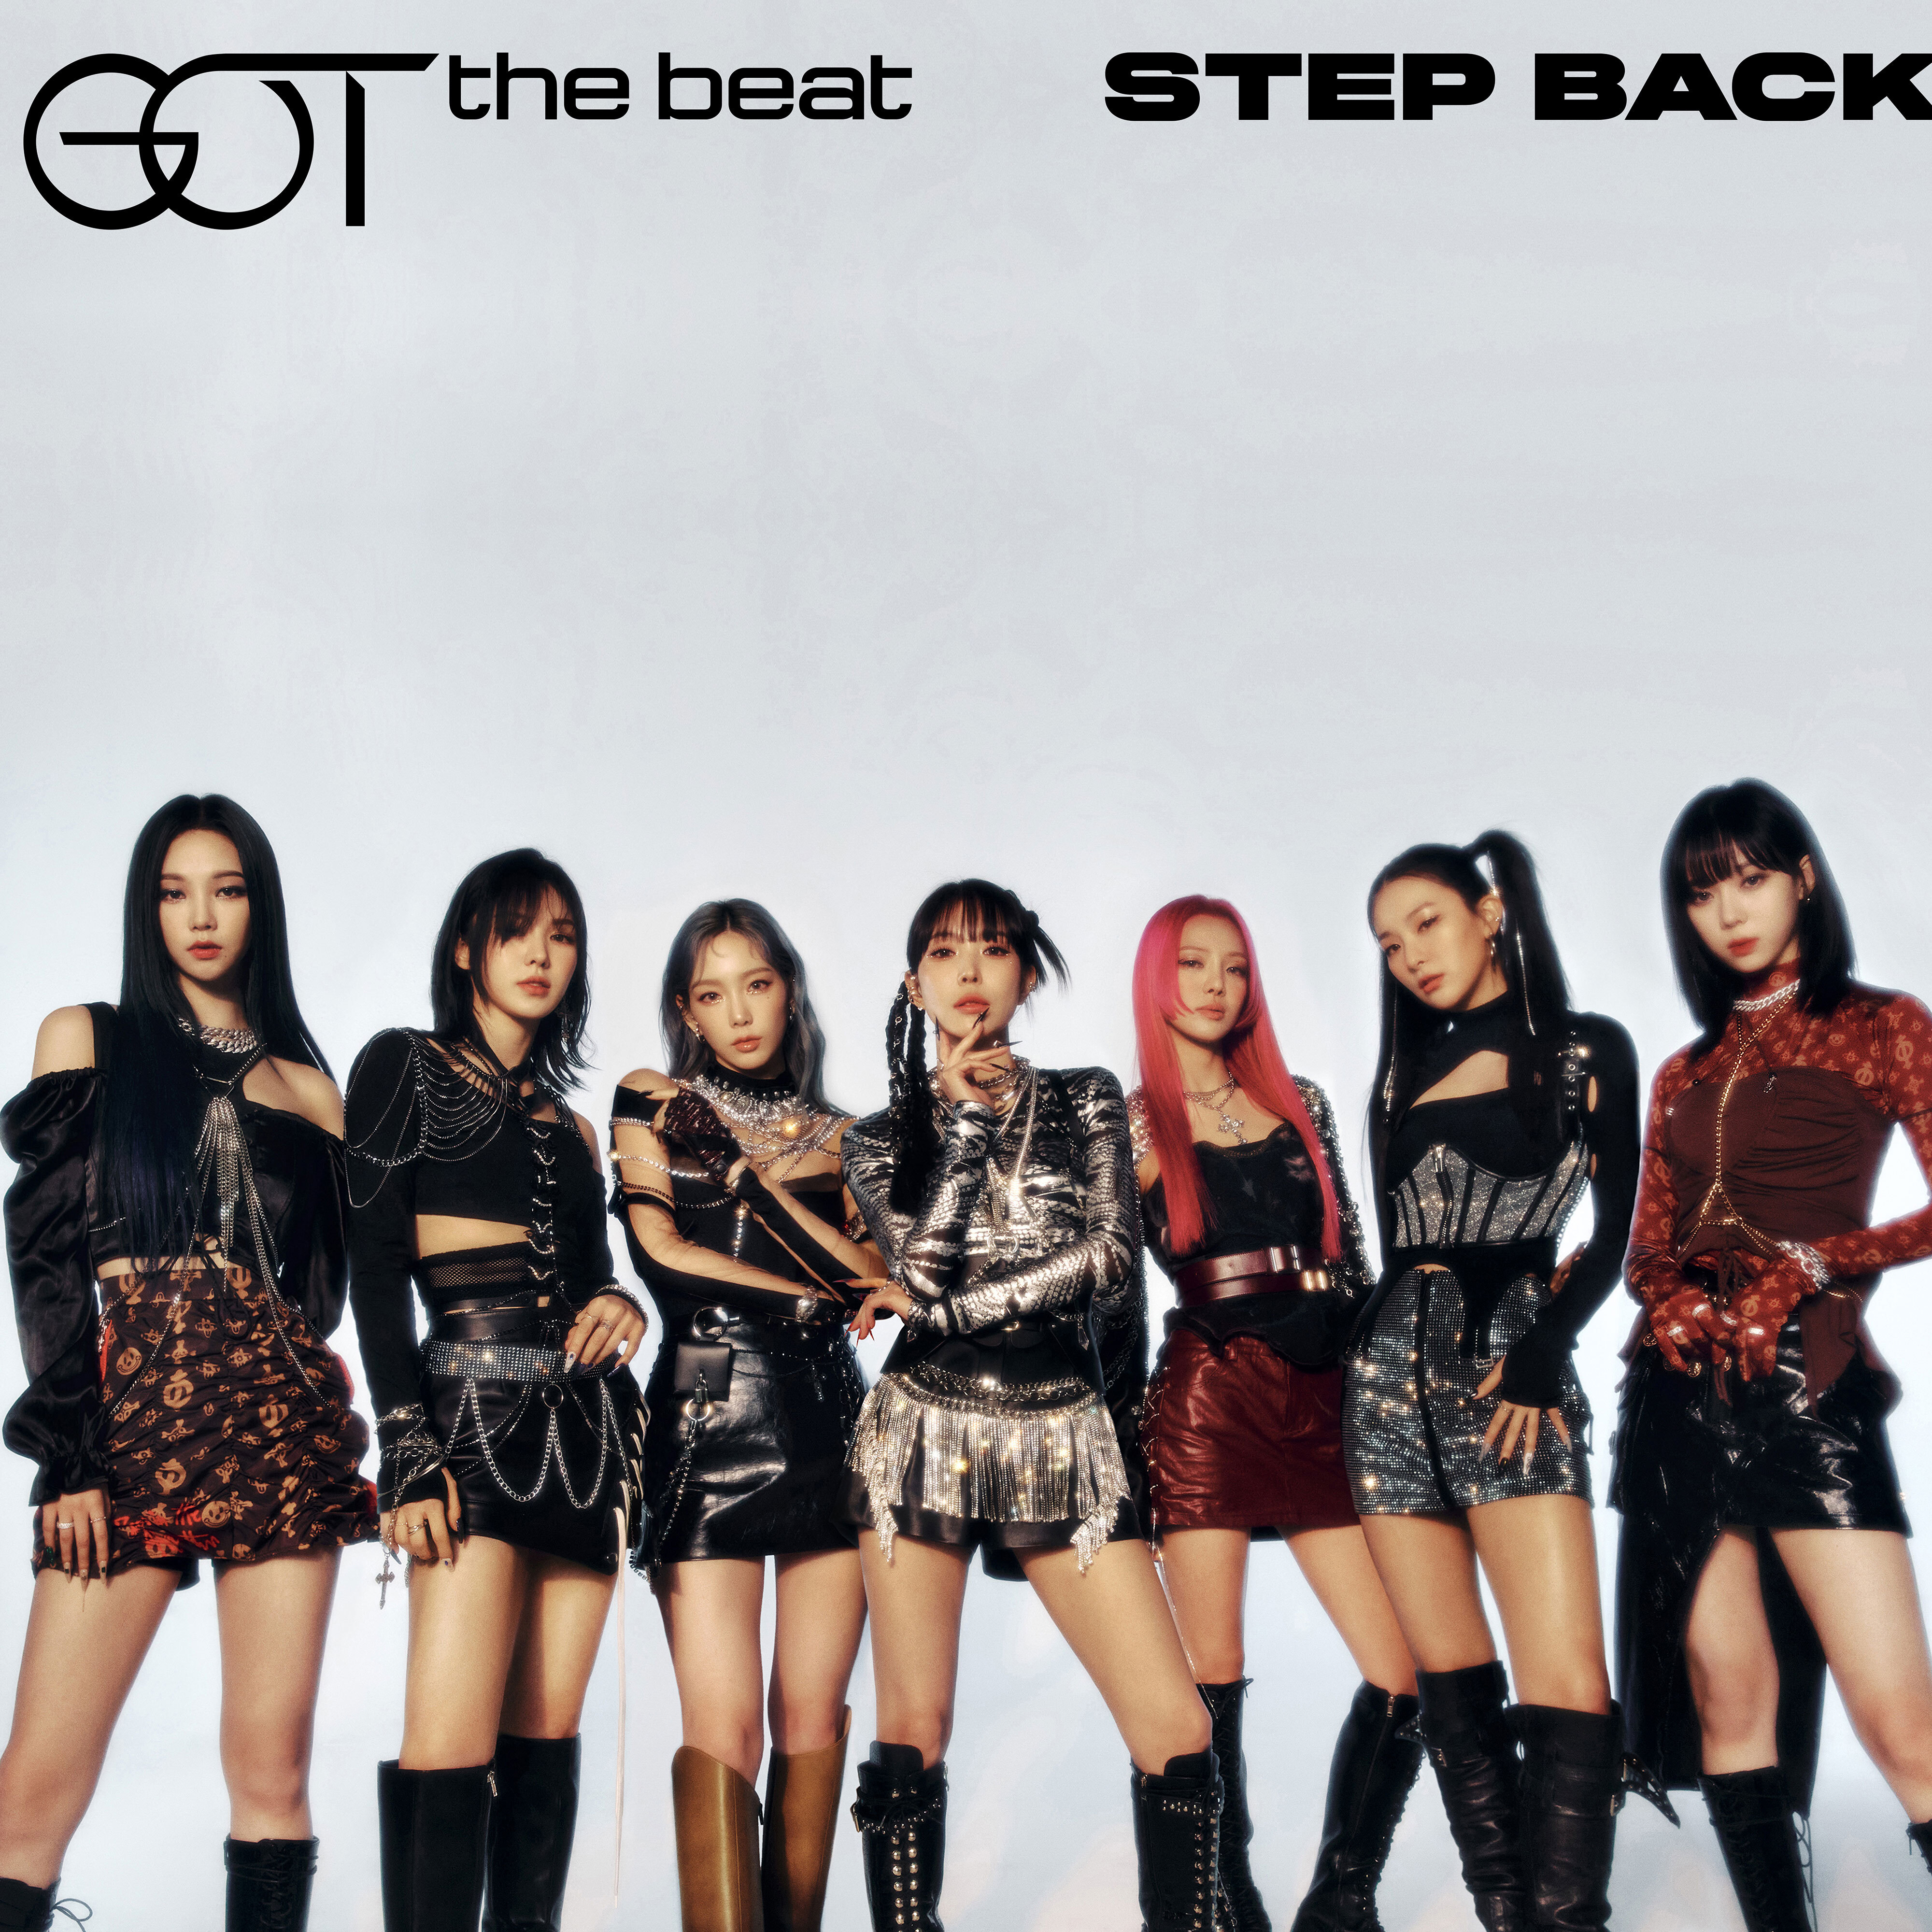 [影音] GOT the beat 'Step Back' 音源